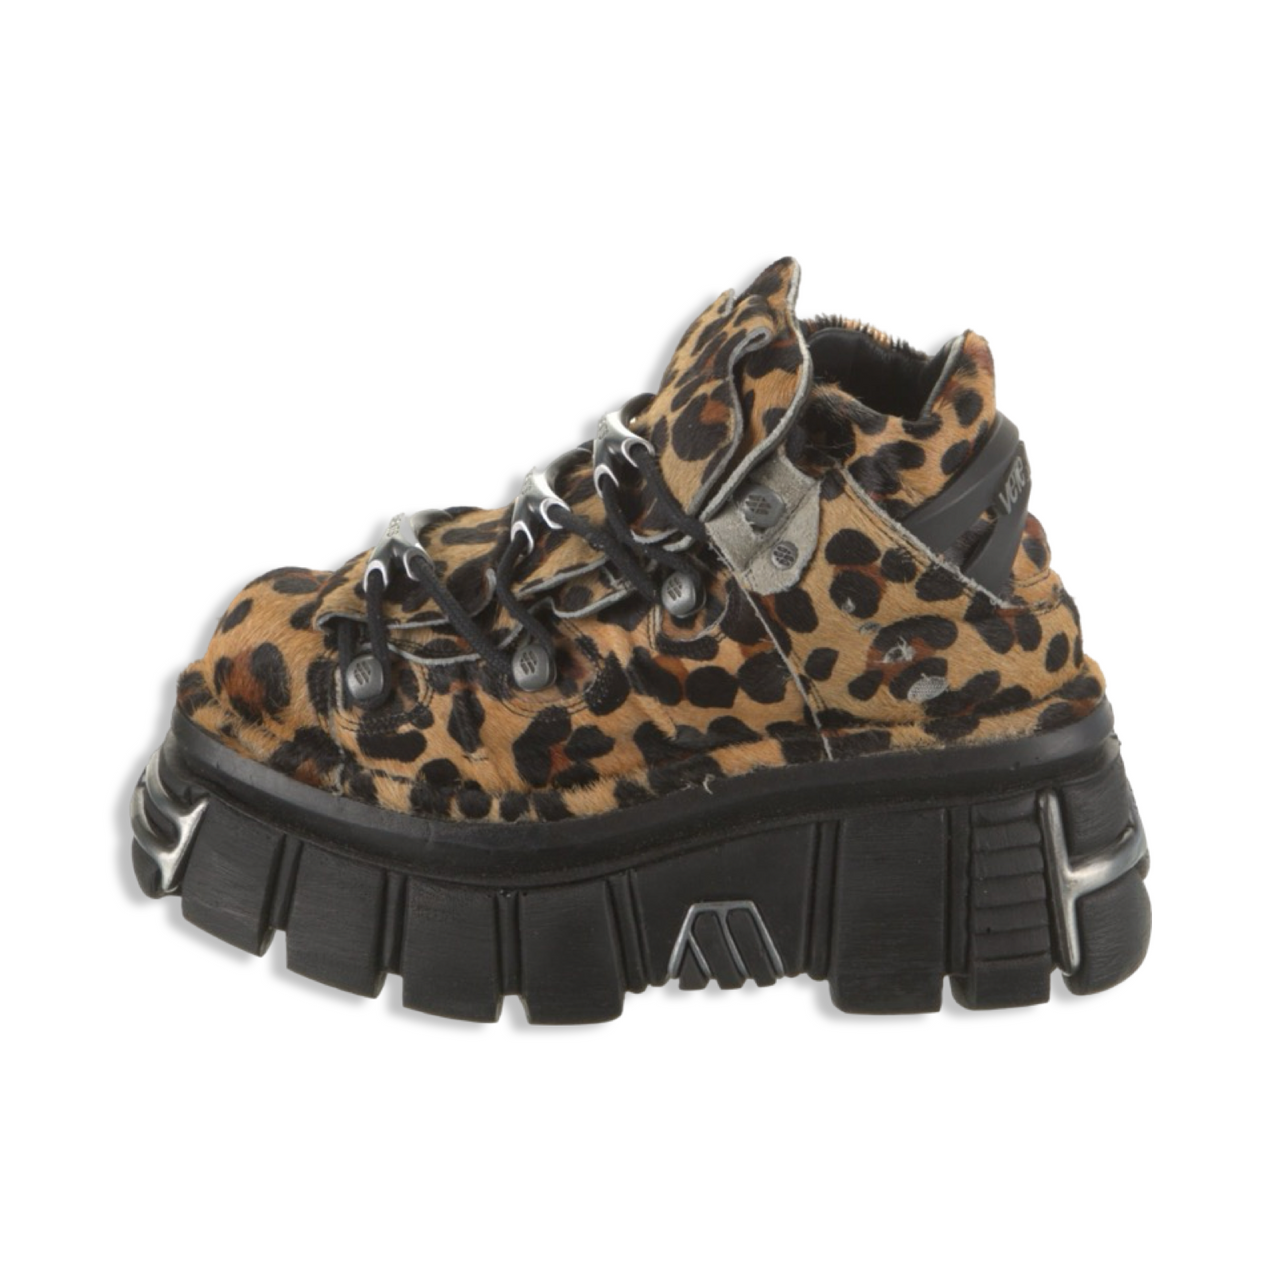 Vetements X New Rock Cheetah Boots